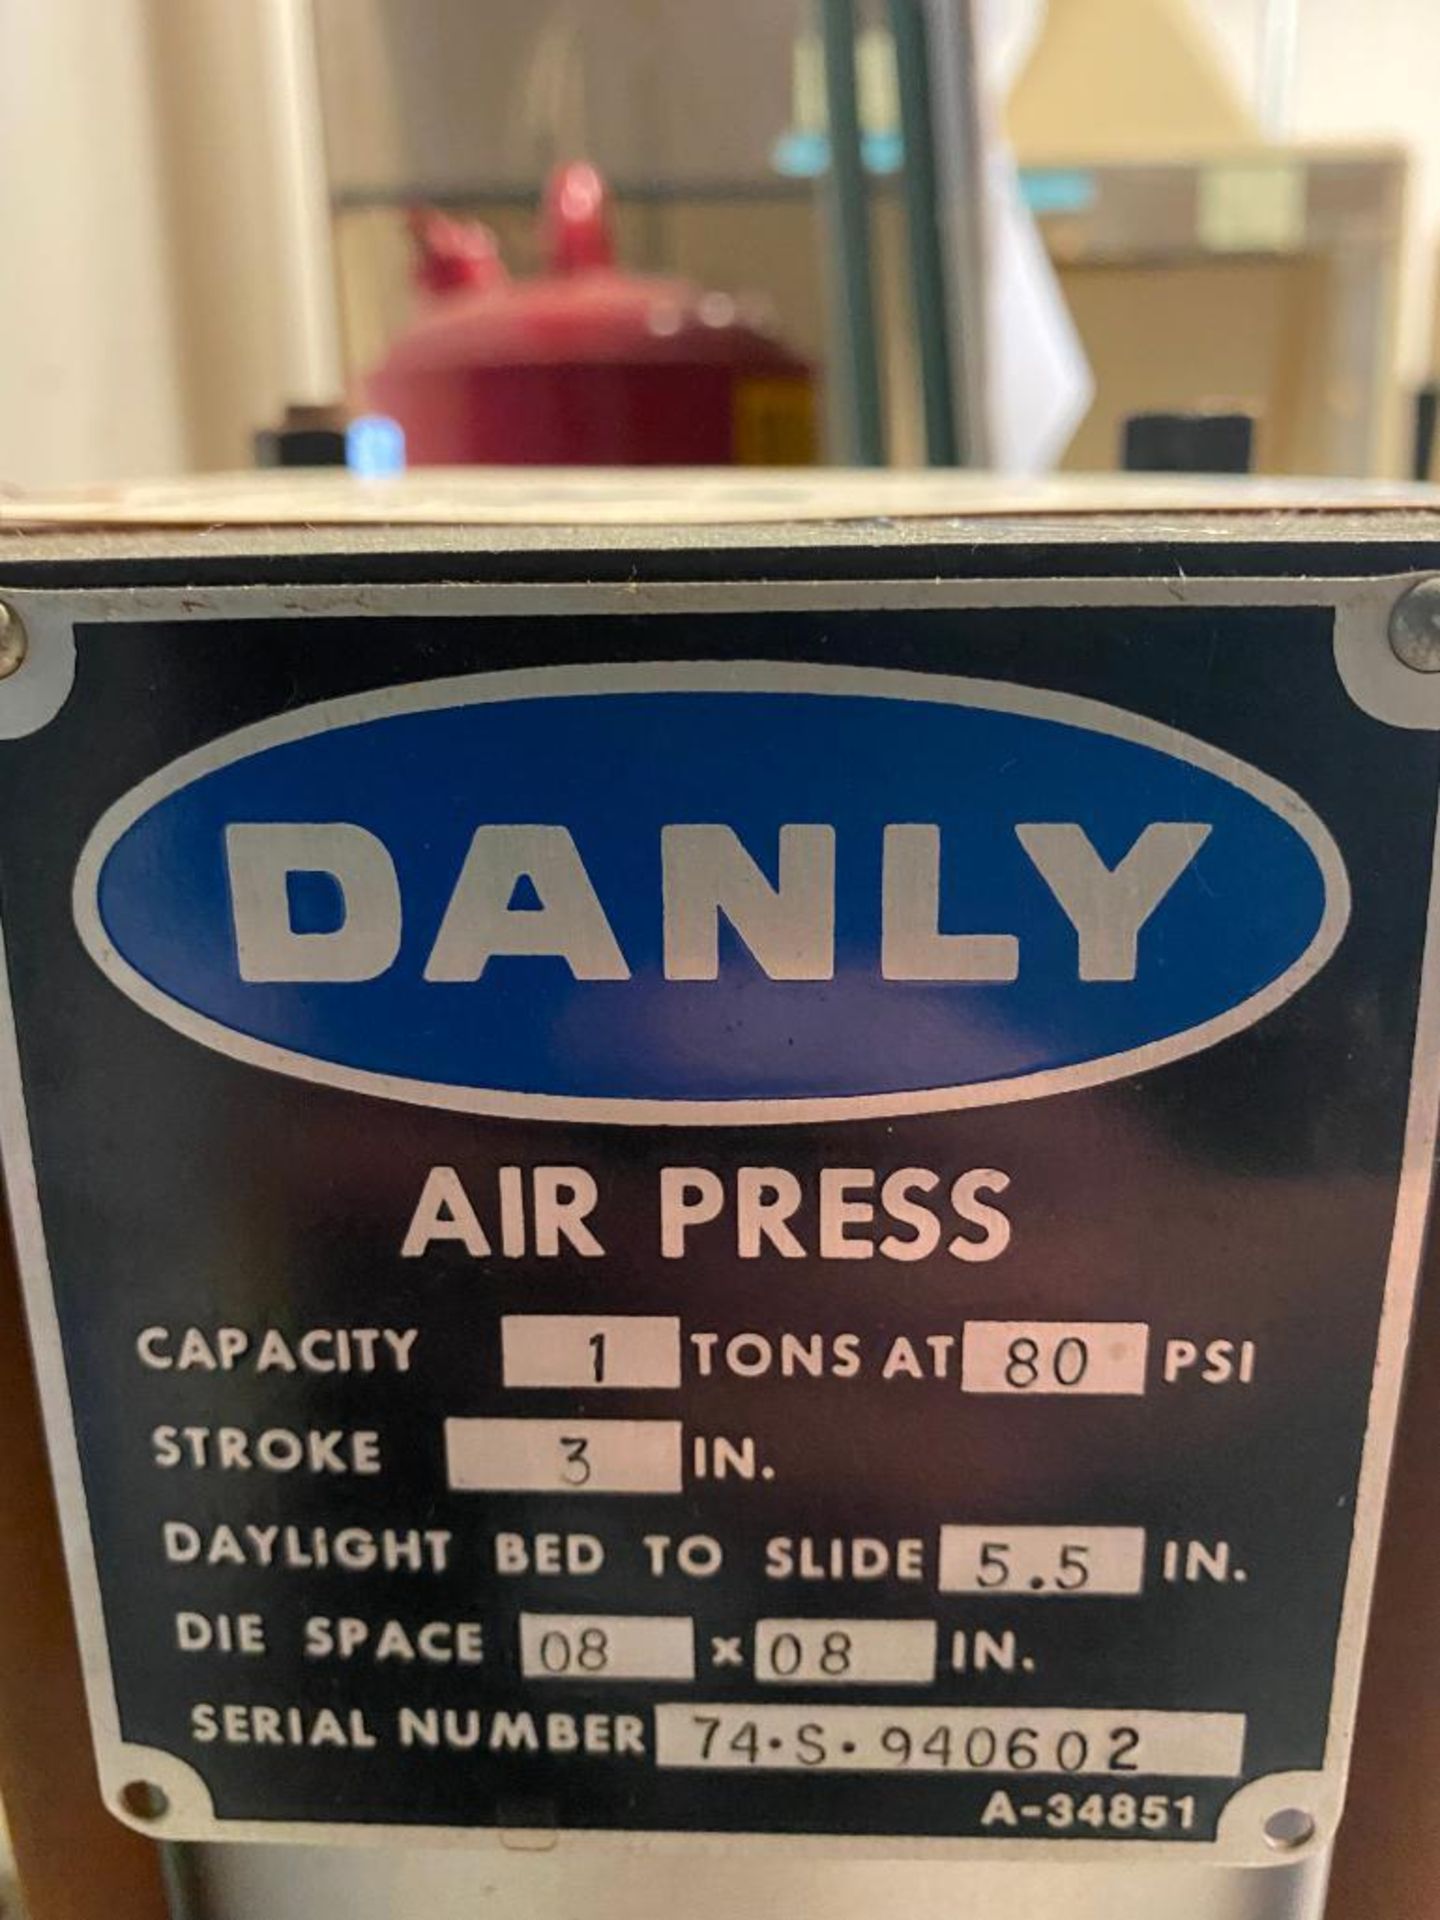 Danly 1 Ton Capacity Air Press - Image 3 of 3